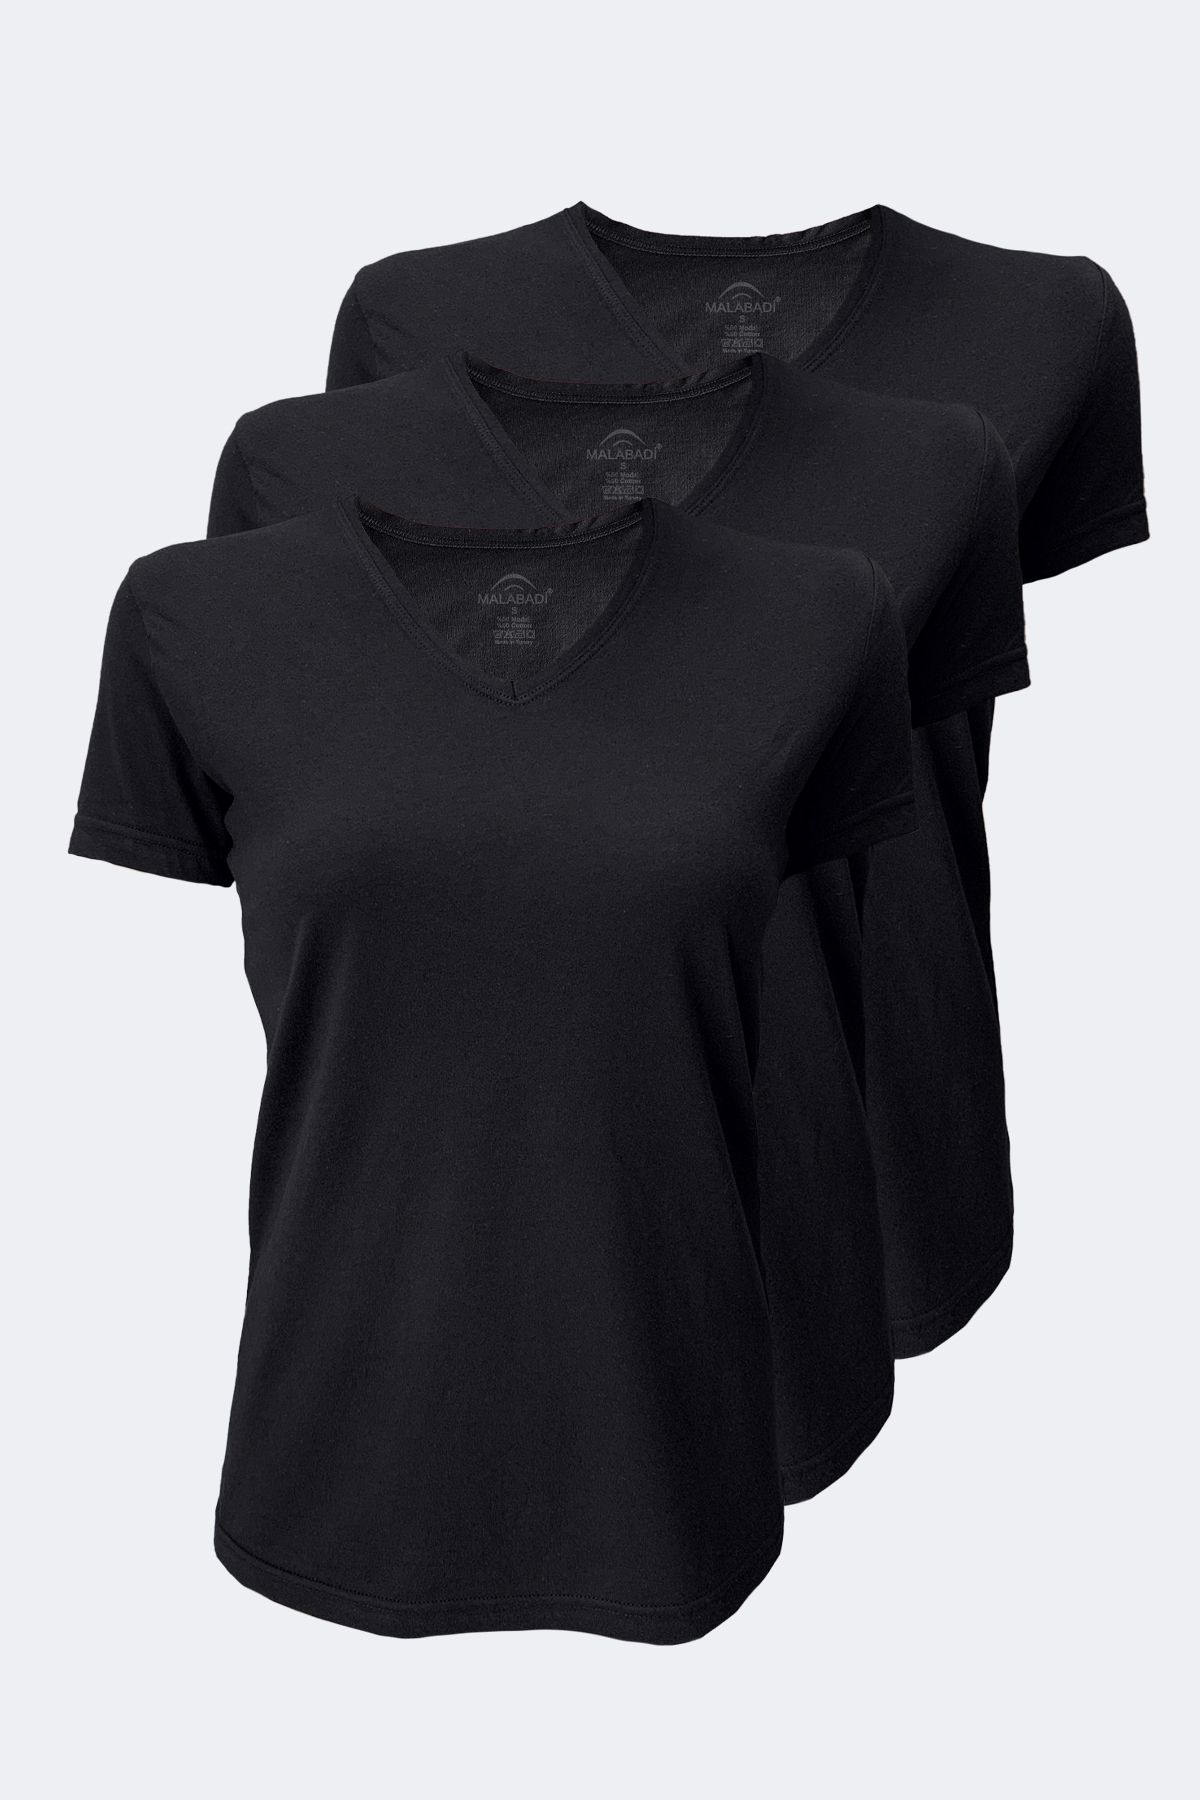 Malabadi Kadın Siyah 3 Lü Paket Basic V Yaka Ince Modal T-shirt 3m7051